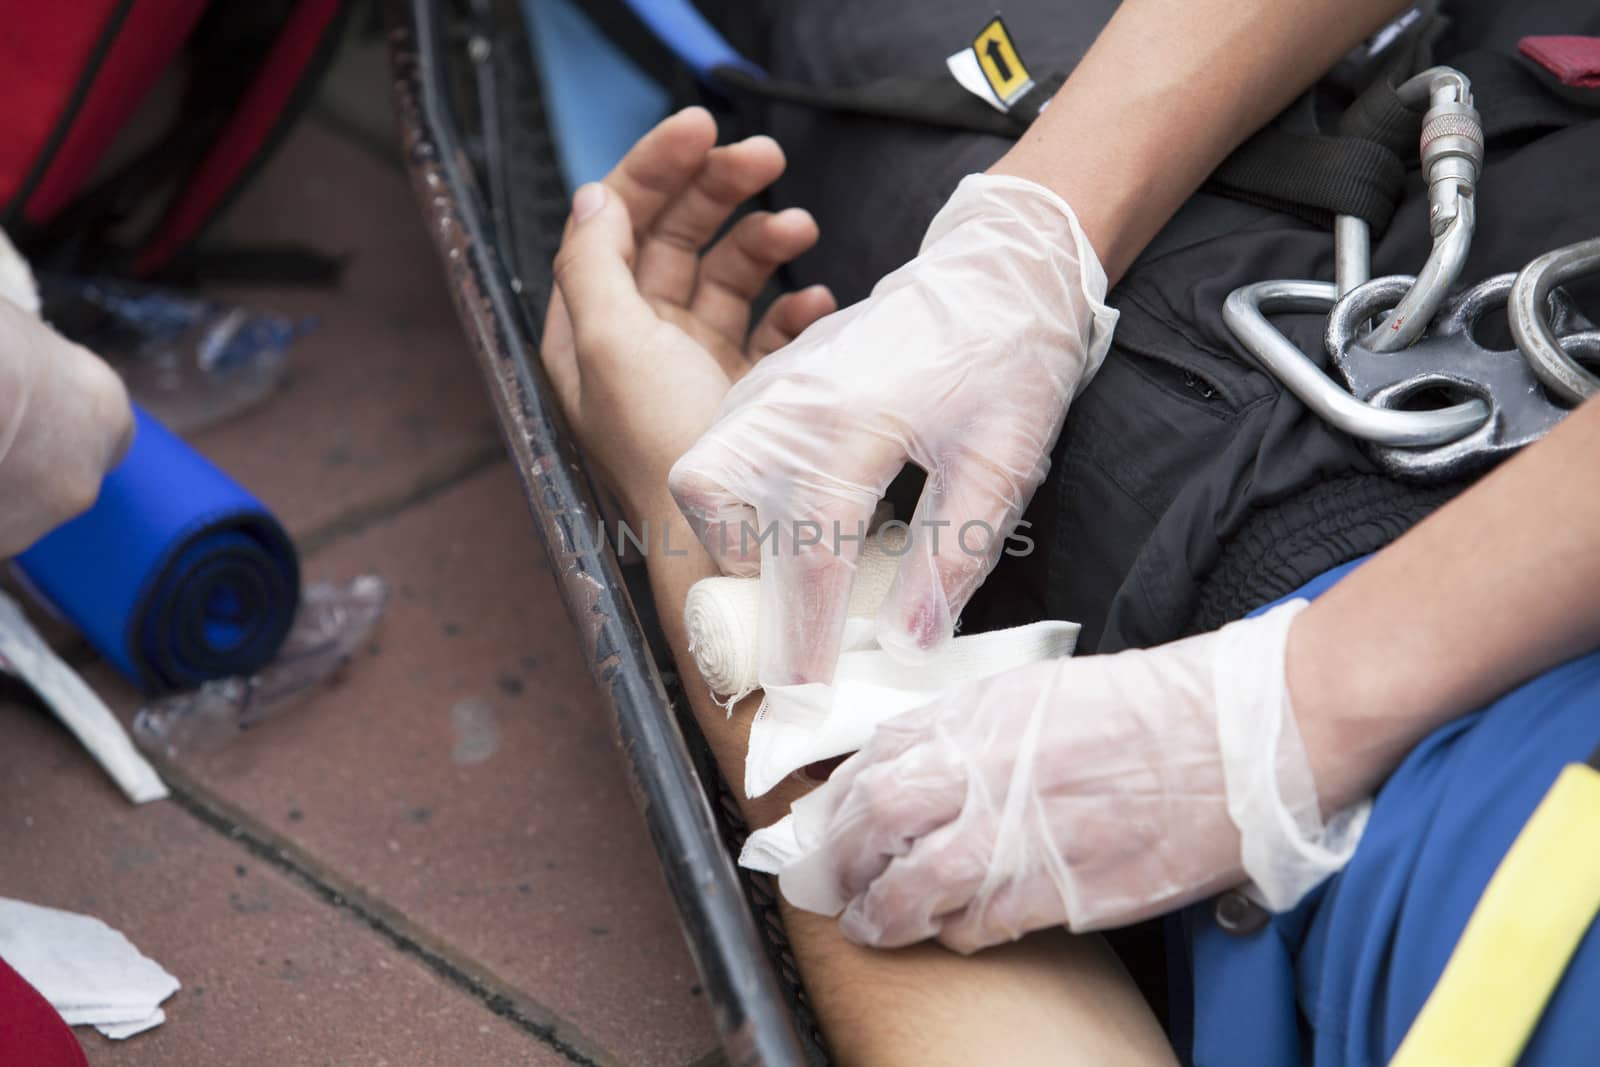 Paramedics putting a bandage on an injured hand